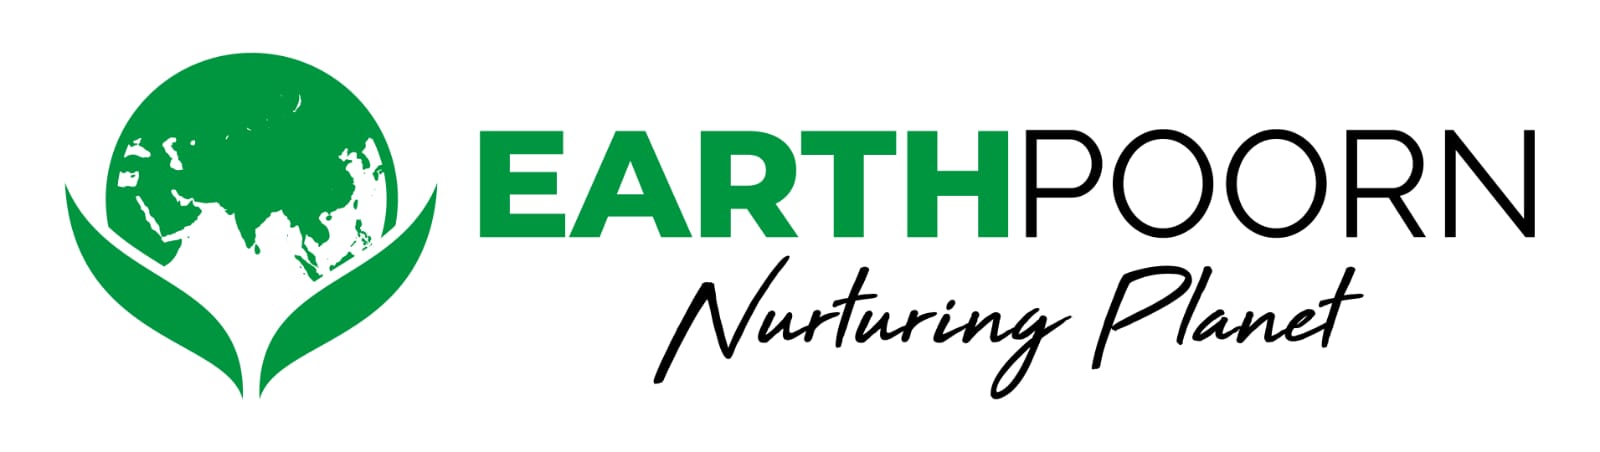 Earthpoorn Logo